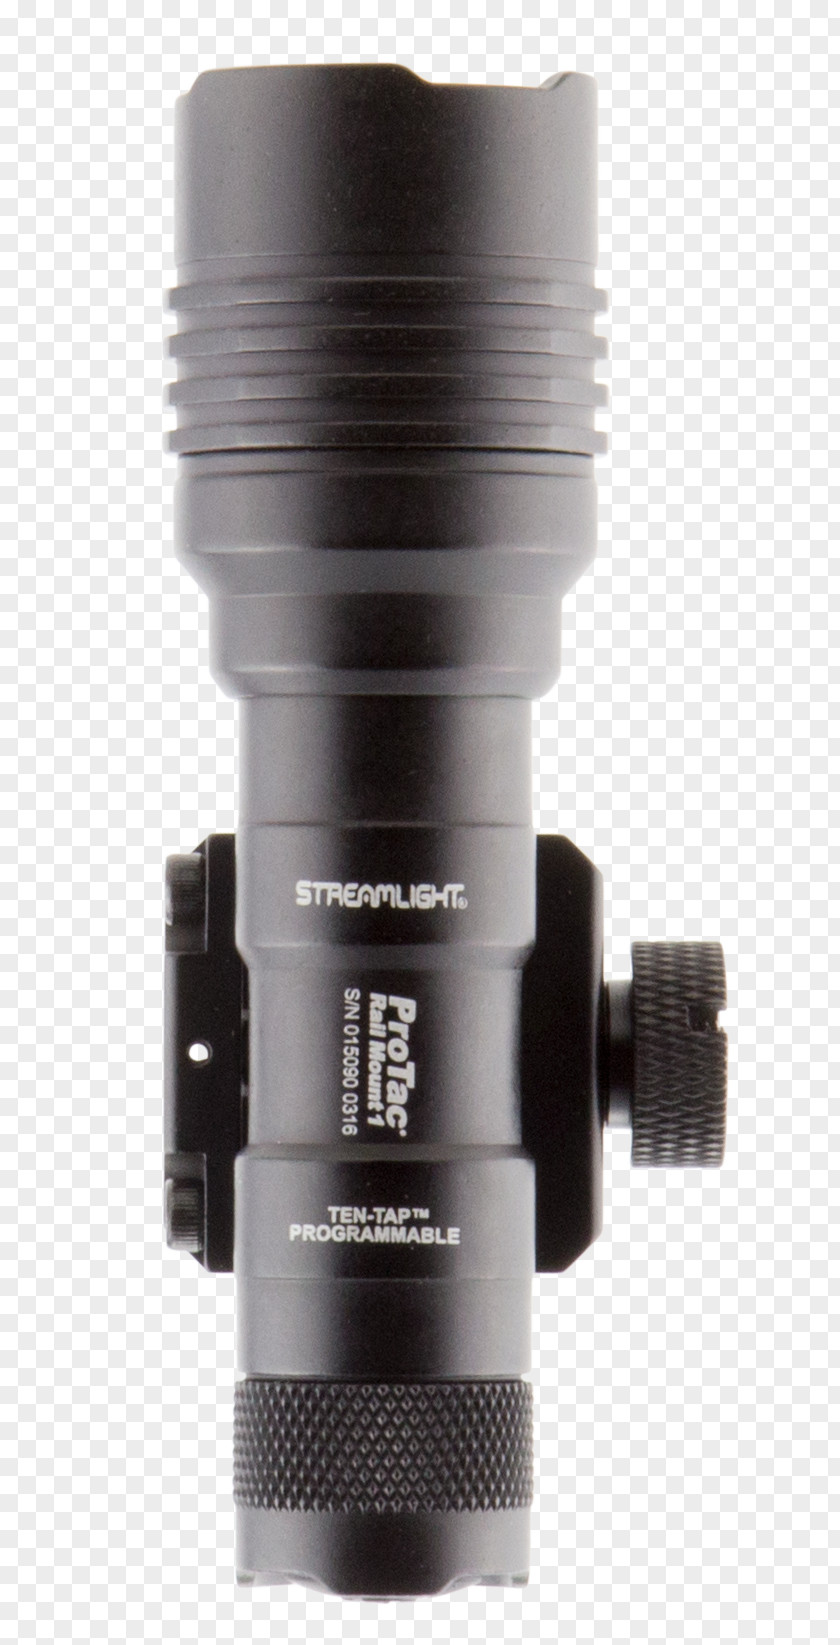 Camera Lens Streamlight, Inc. Tactical Light Weaver Rail Mount Optical Instrument PNG